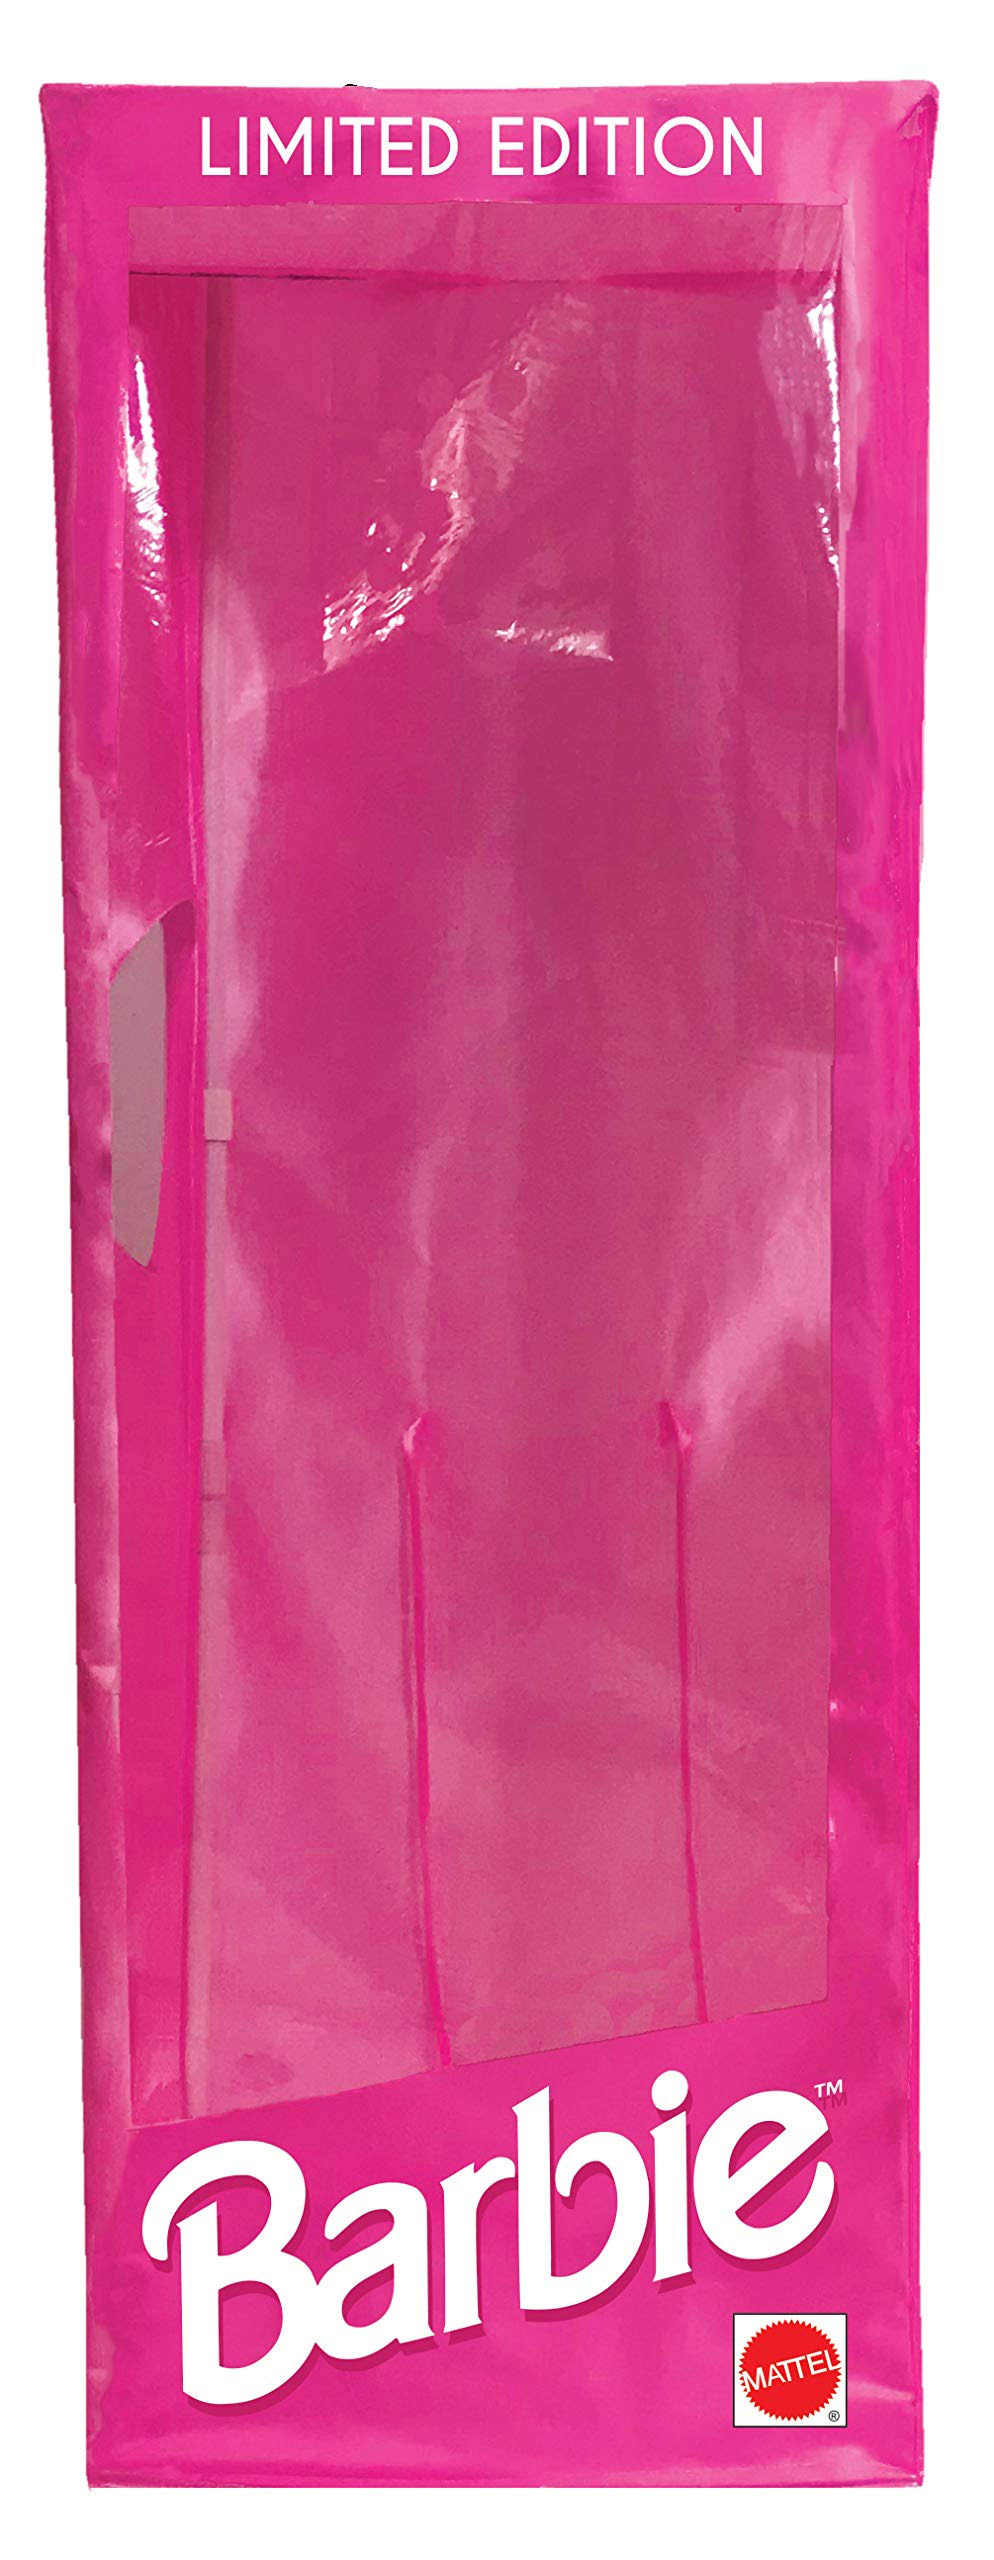 Rasta Imposta Barbie Doll Box Costume - Pink - One Size